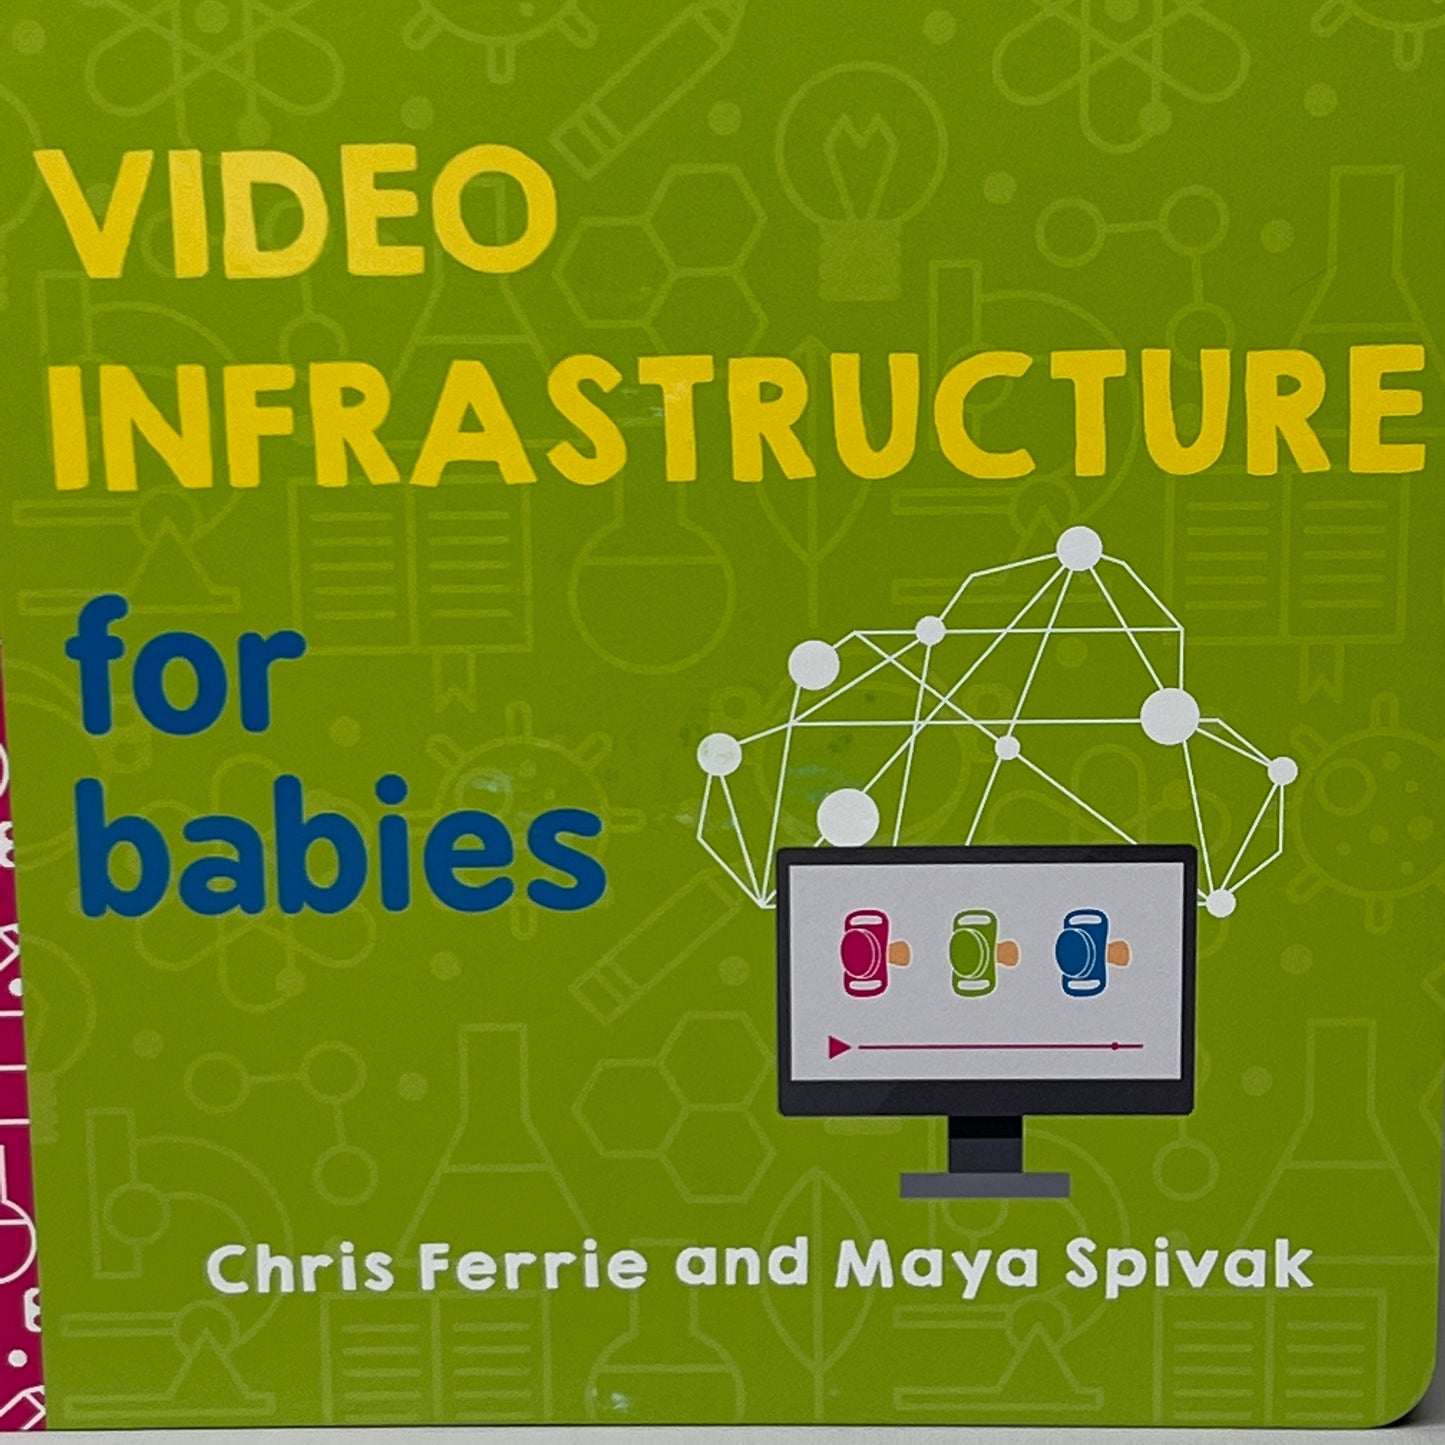 VIDEO INFRASTRUCTURE FOR BABIES Book Chris Ferrie & Maya Spivak (New)